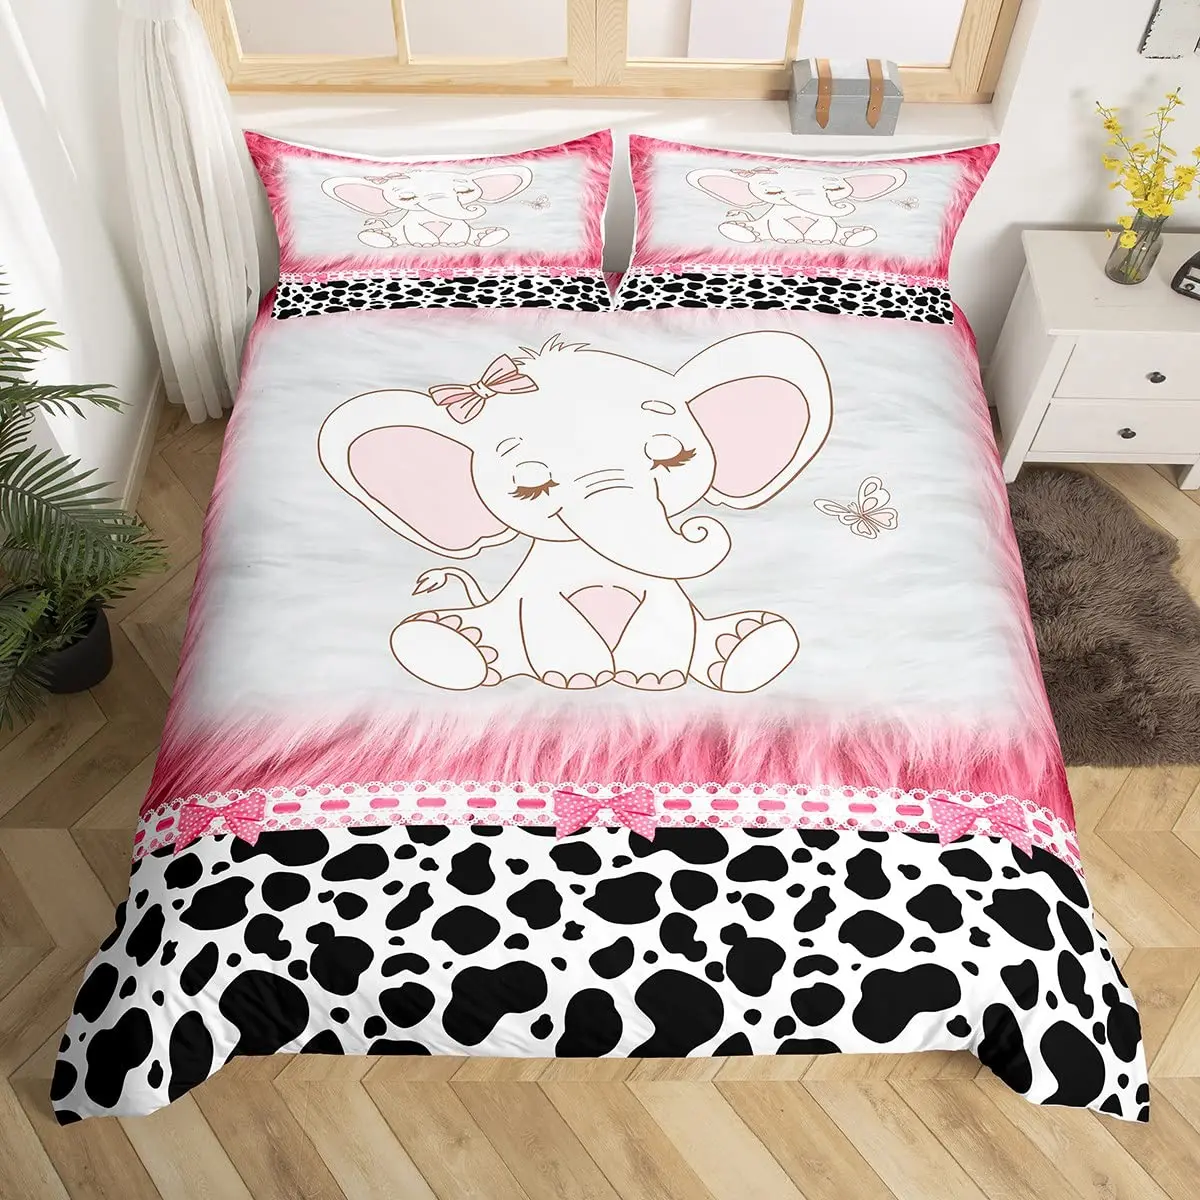 Cartoon Elephant Duvet Cover Set Cowhide Bedding Set Microfiber Pink Cow Fur Comforter Cover Full King for Kids Teens Room Decor